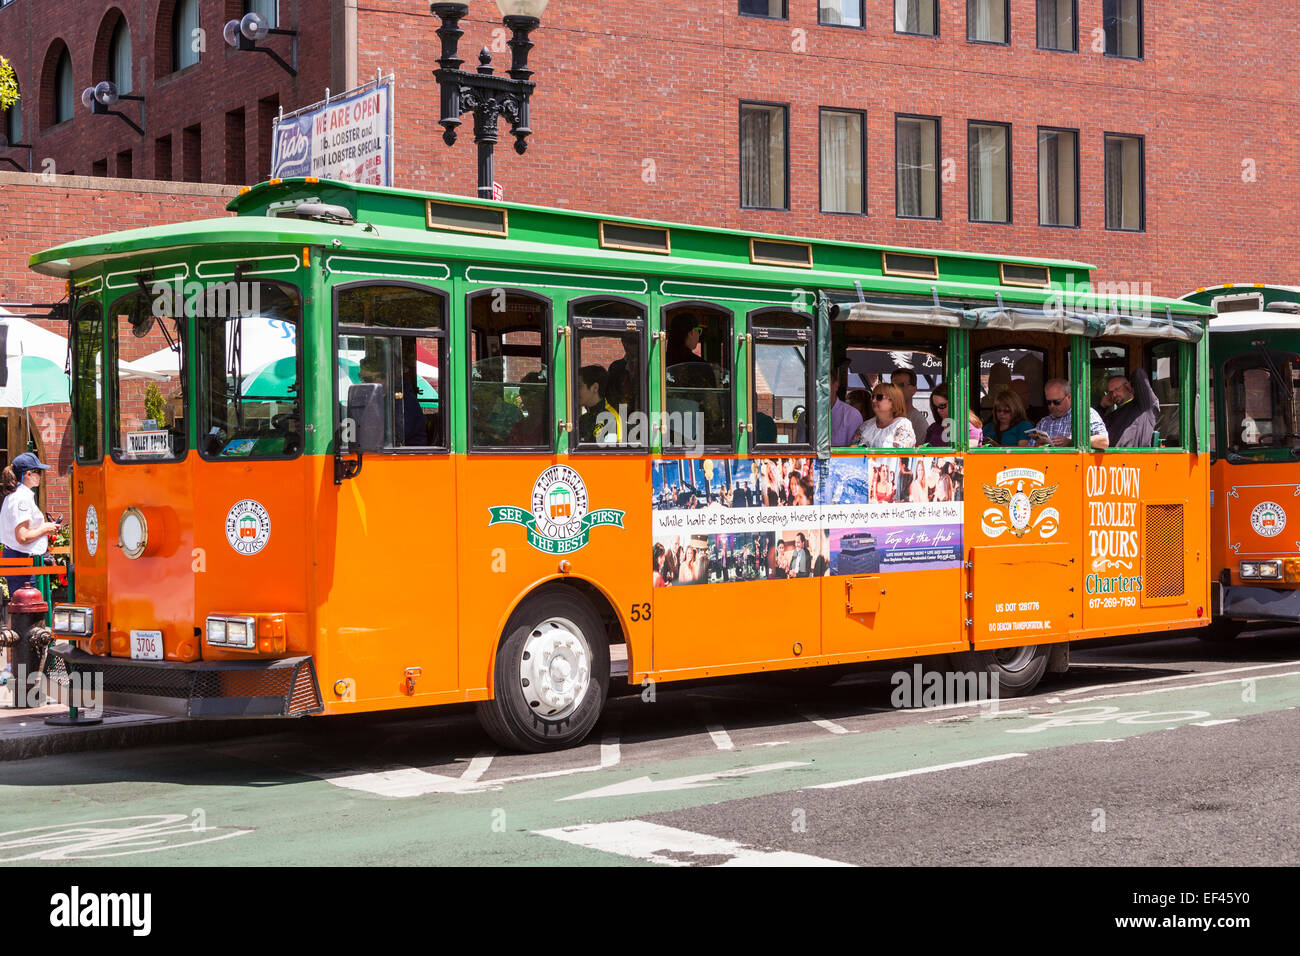 Old Town Trolley Tours city sightseeing bus, Boston, Massachusetts, USA Stock Photo